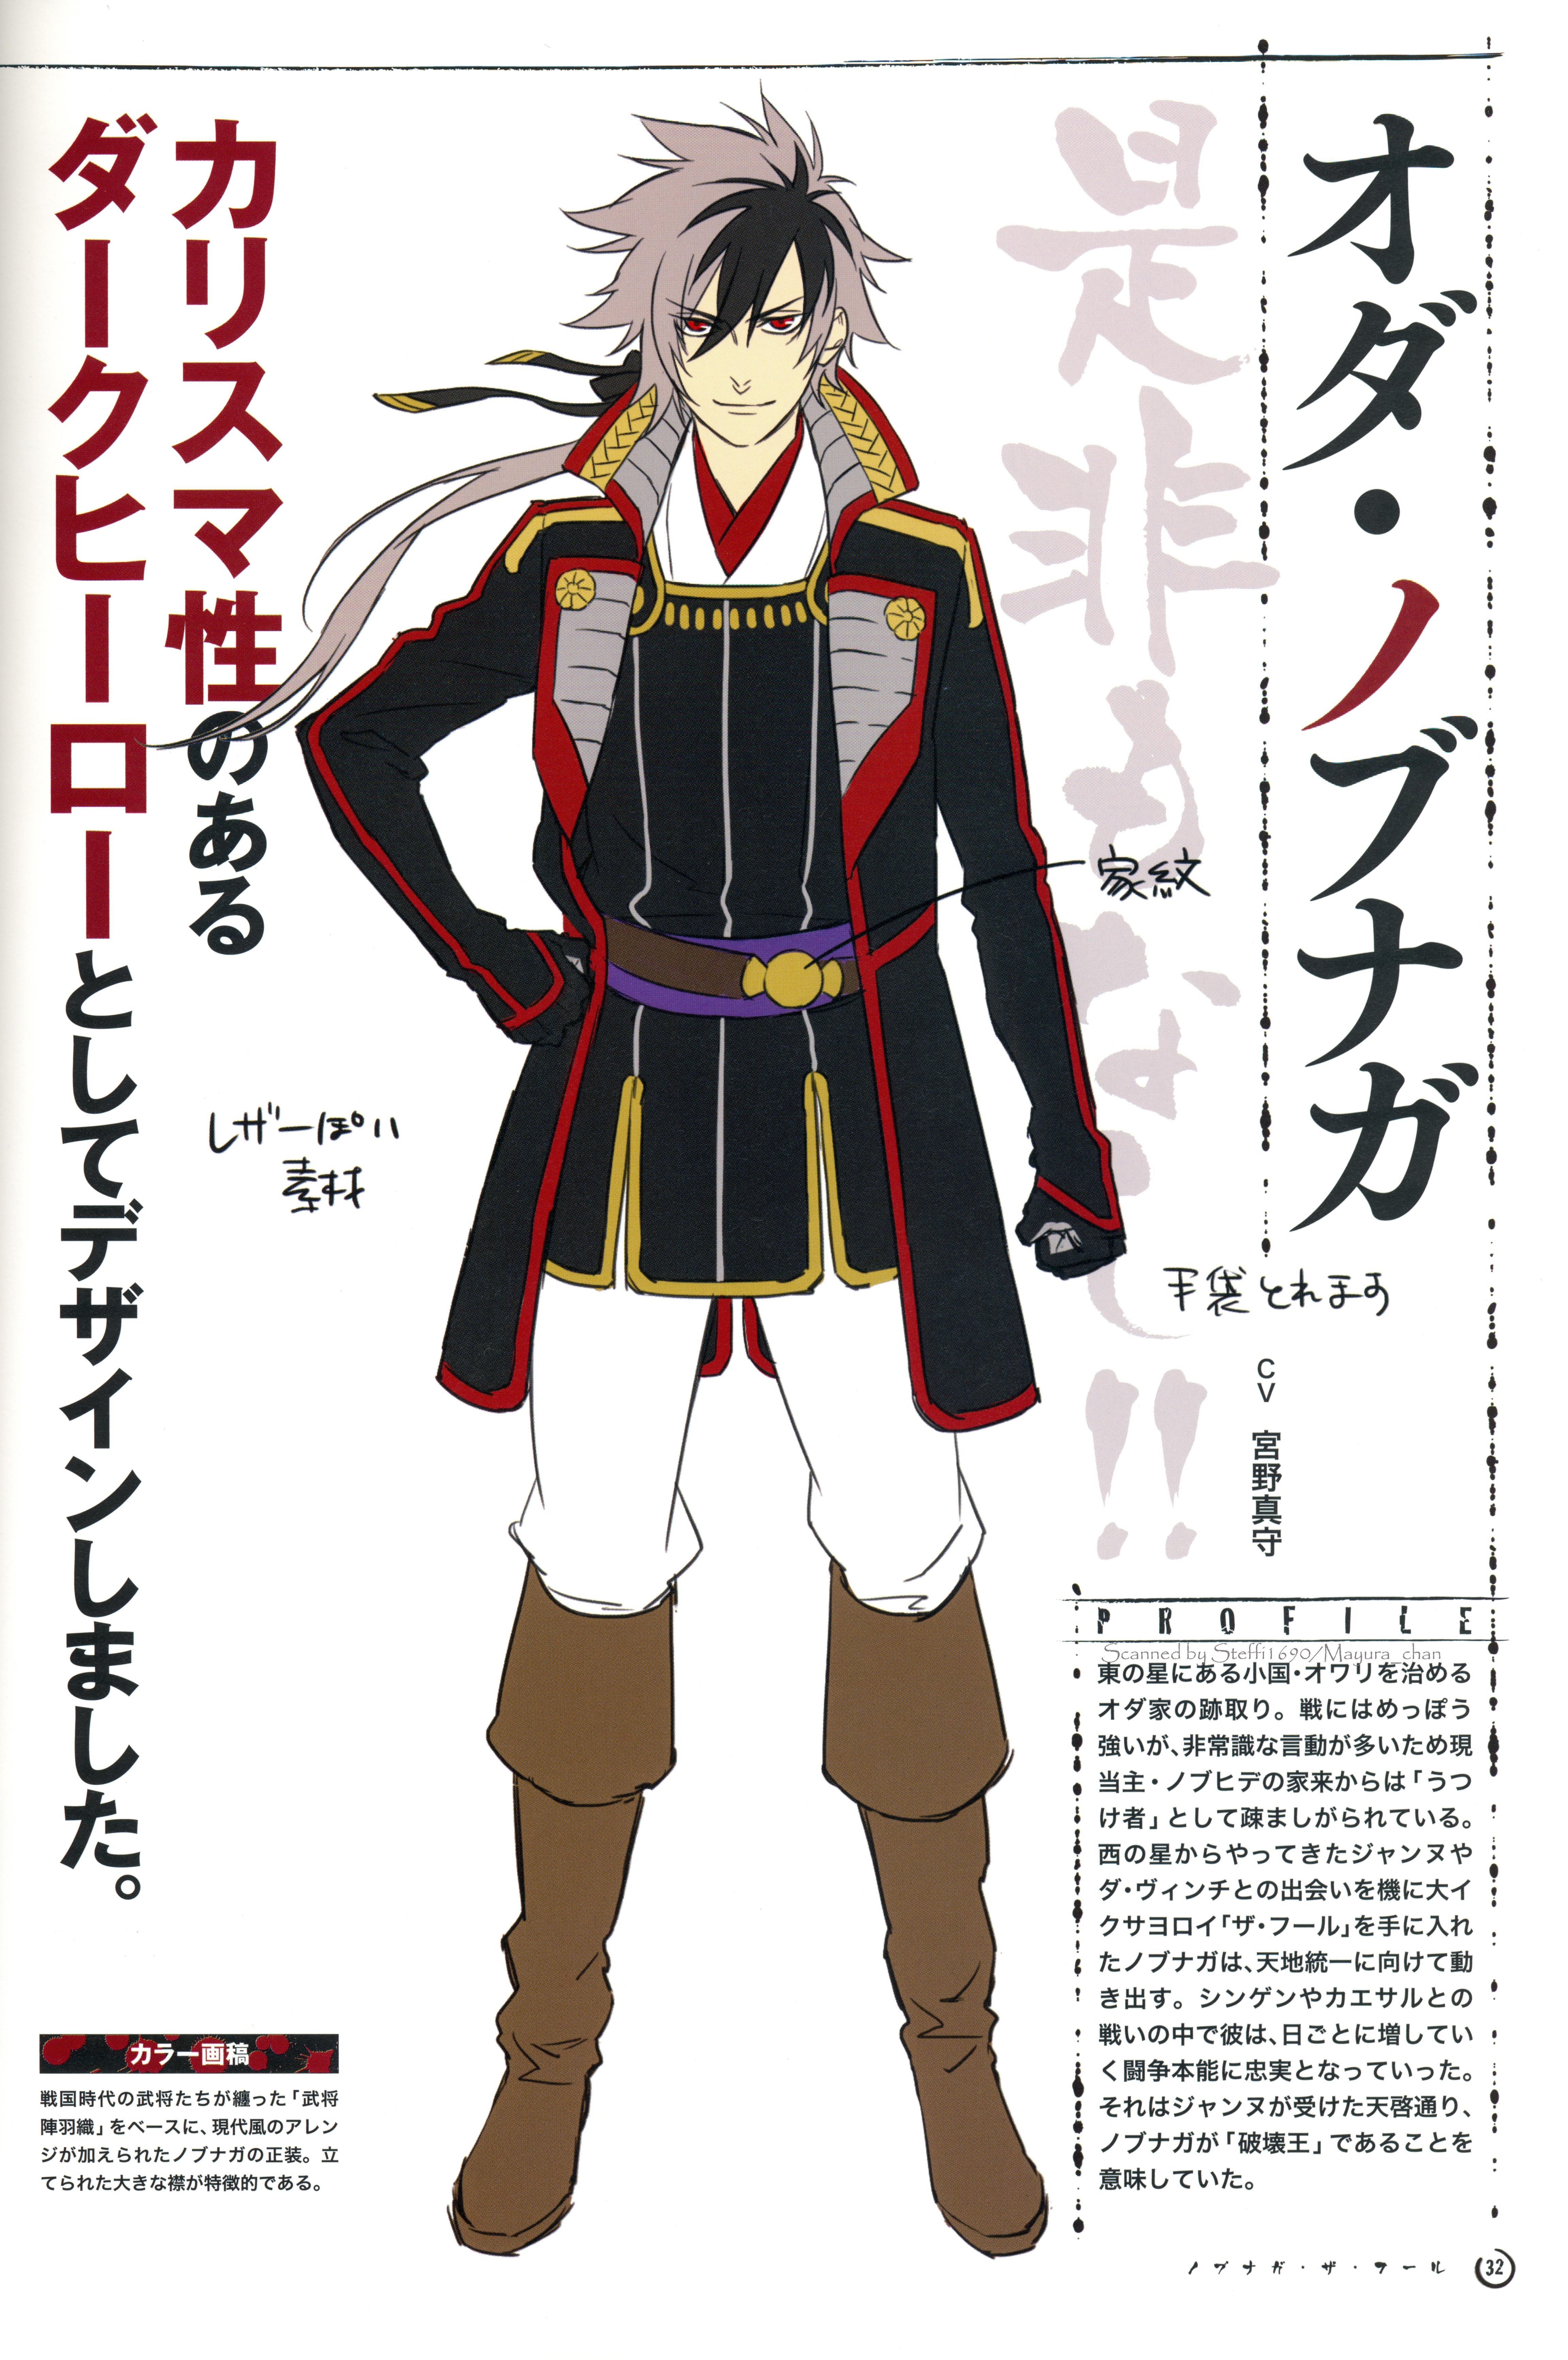 View Fullsize Oda Nobunaga Image, HD Wallpaper & background